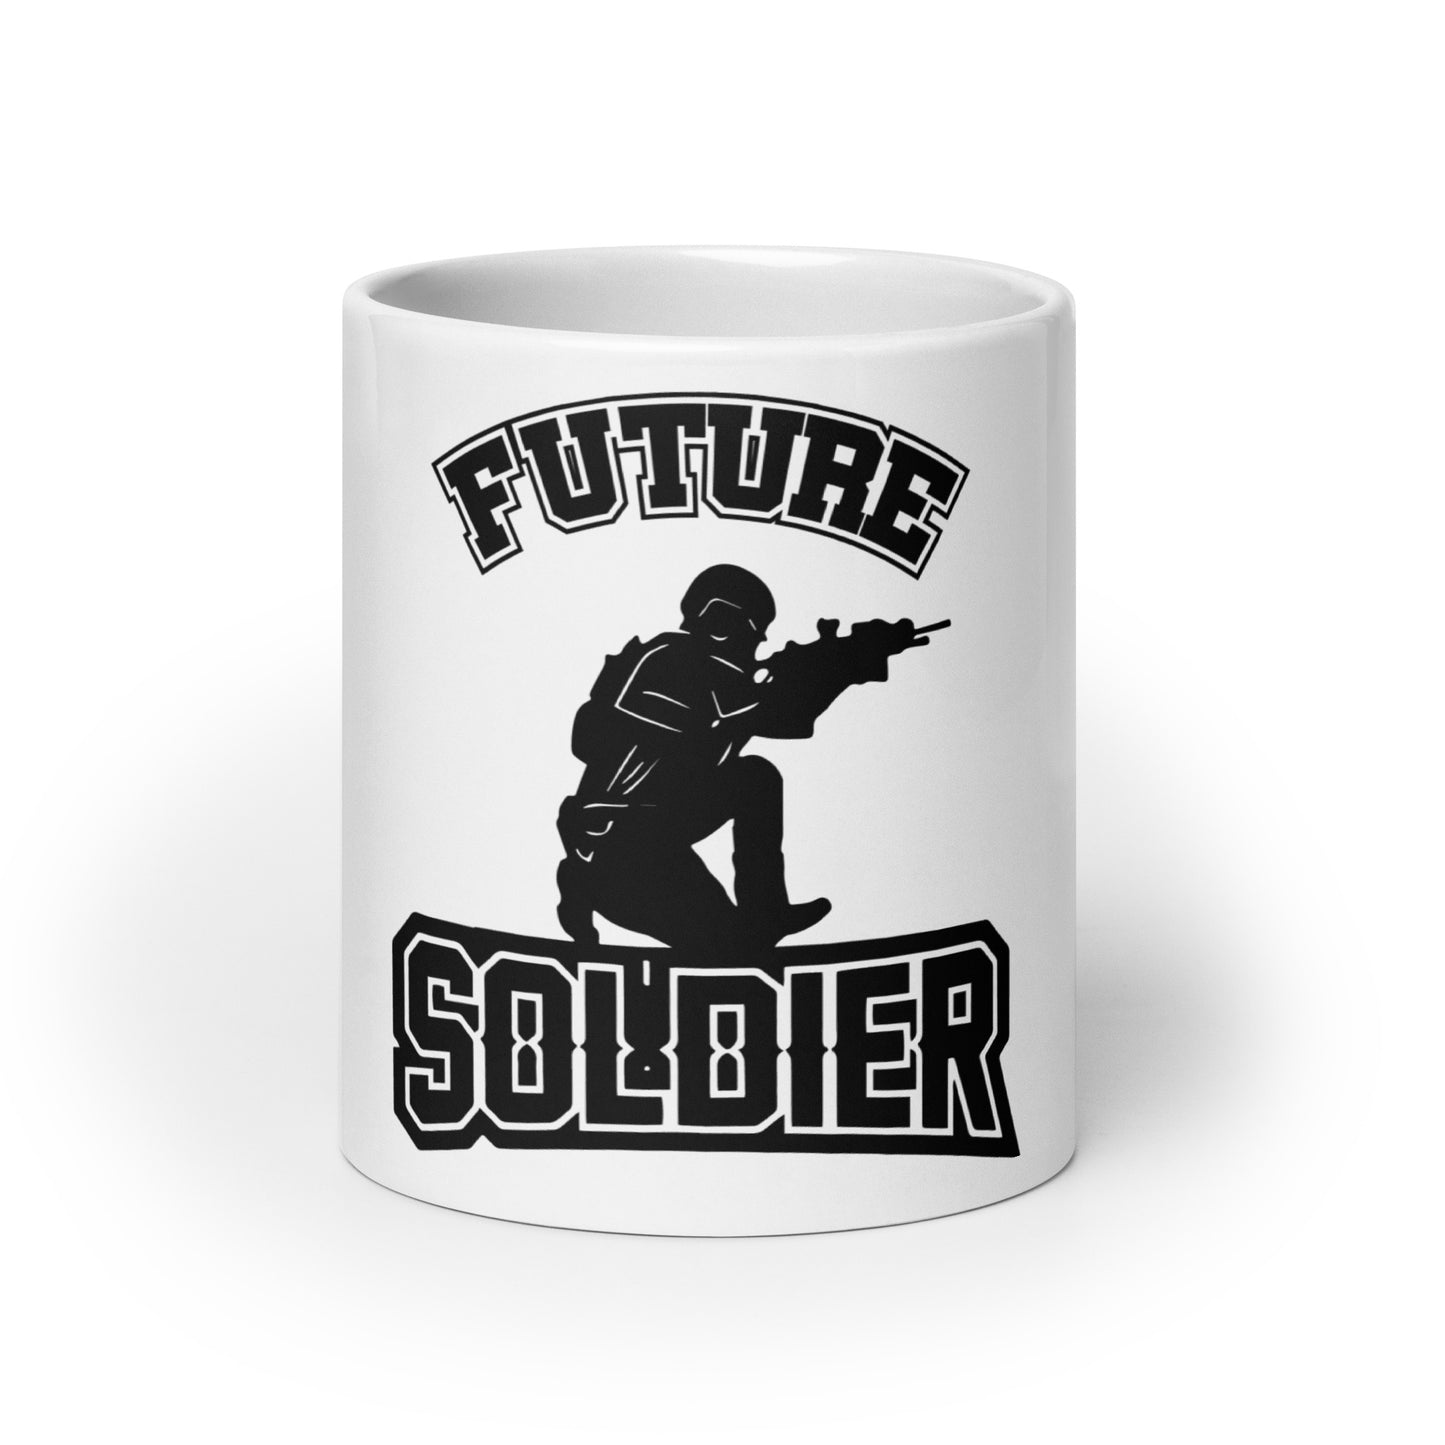 Future Soldier mug